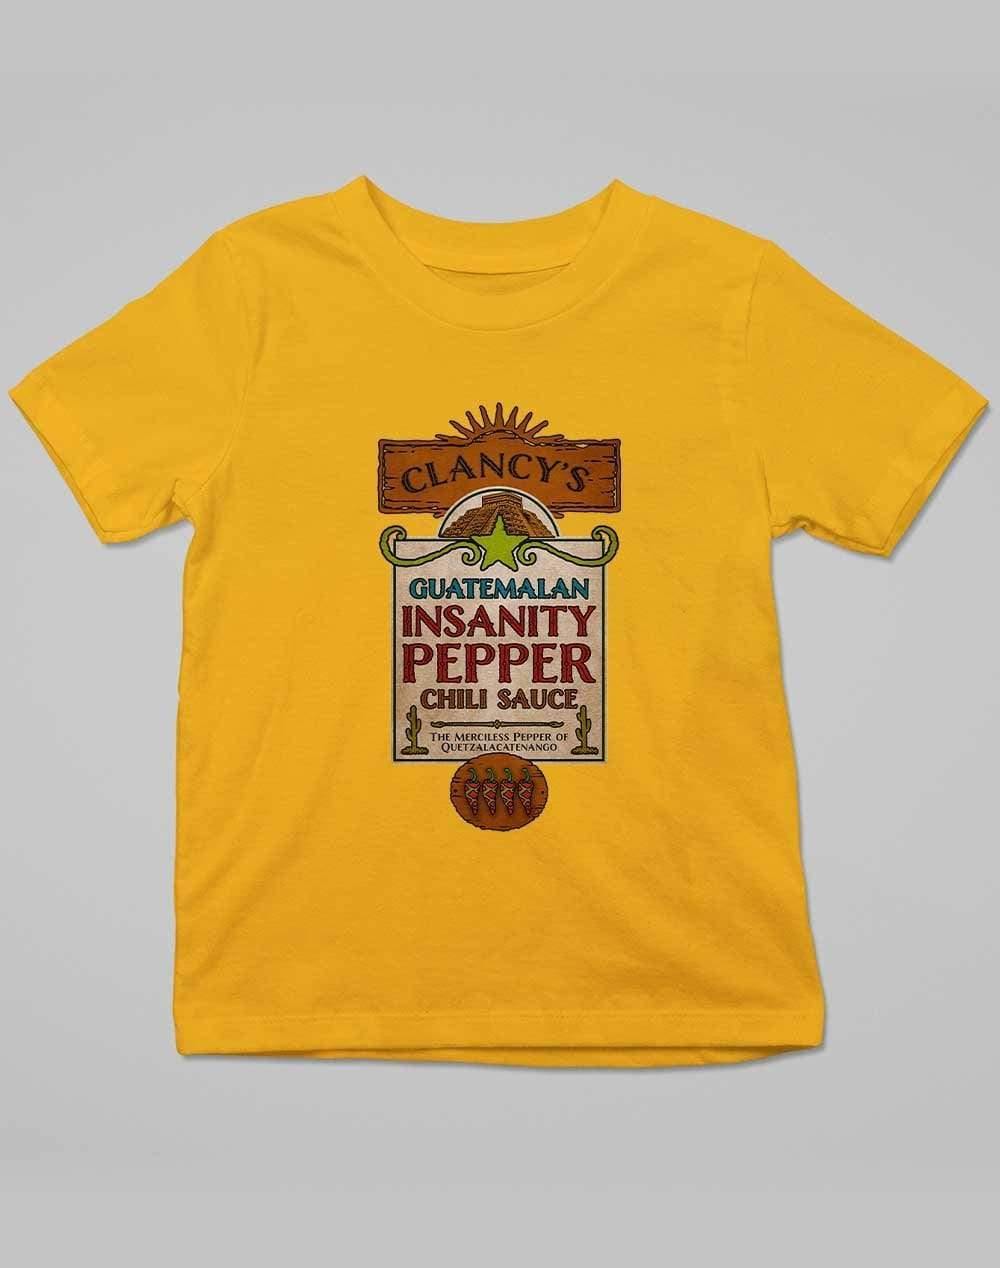 Guatemalan Insanity Pepper Chili Sauce Kids T-Shirt 3-4 years / Gold  - Off World Tees